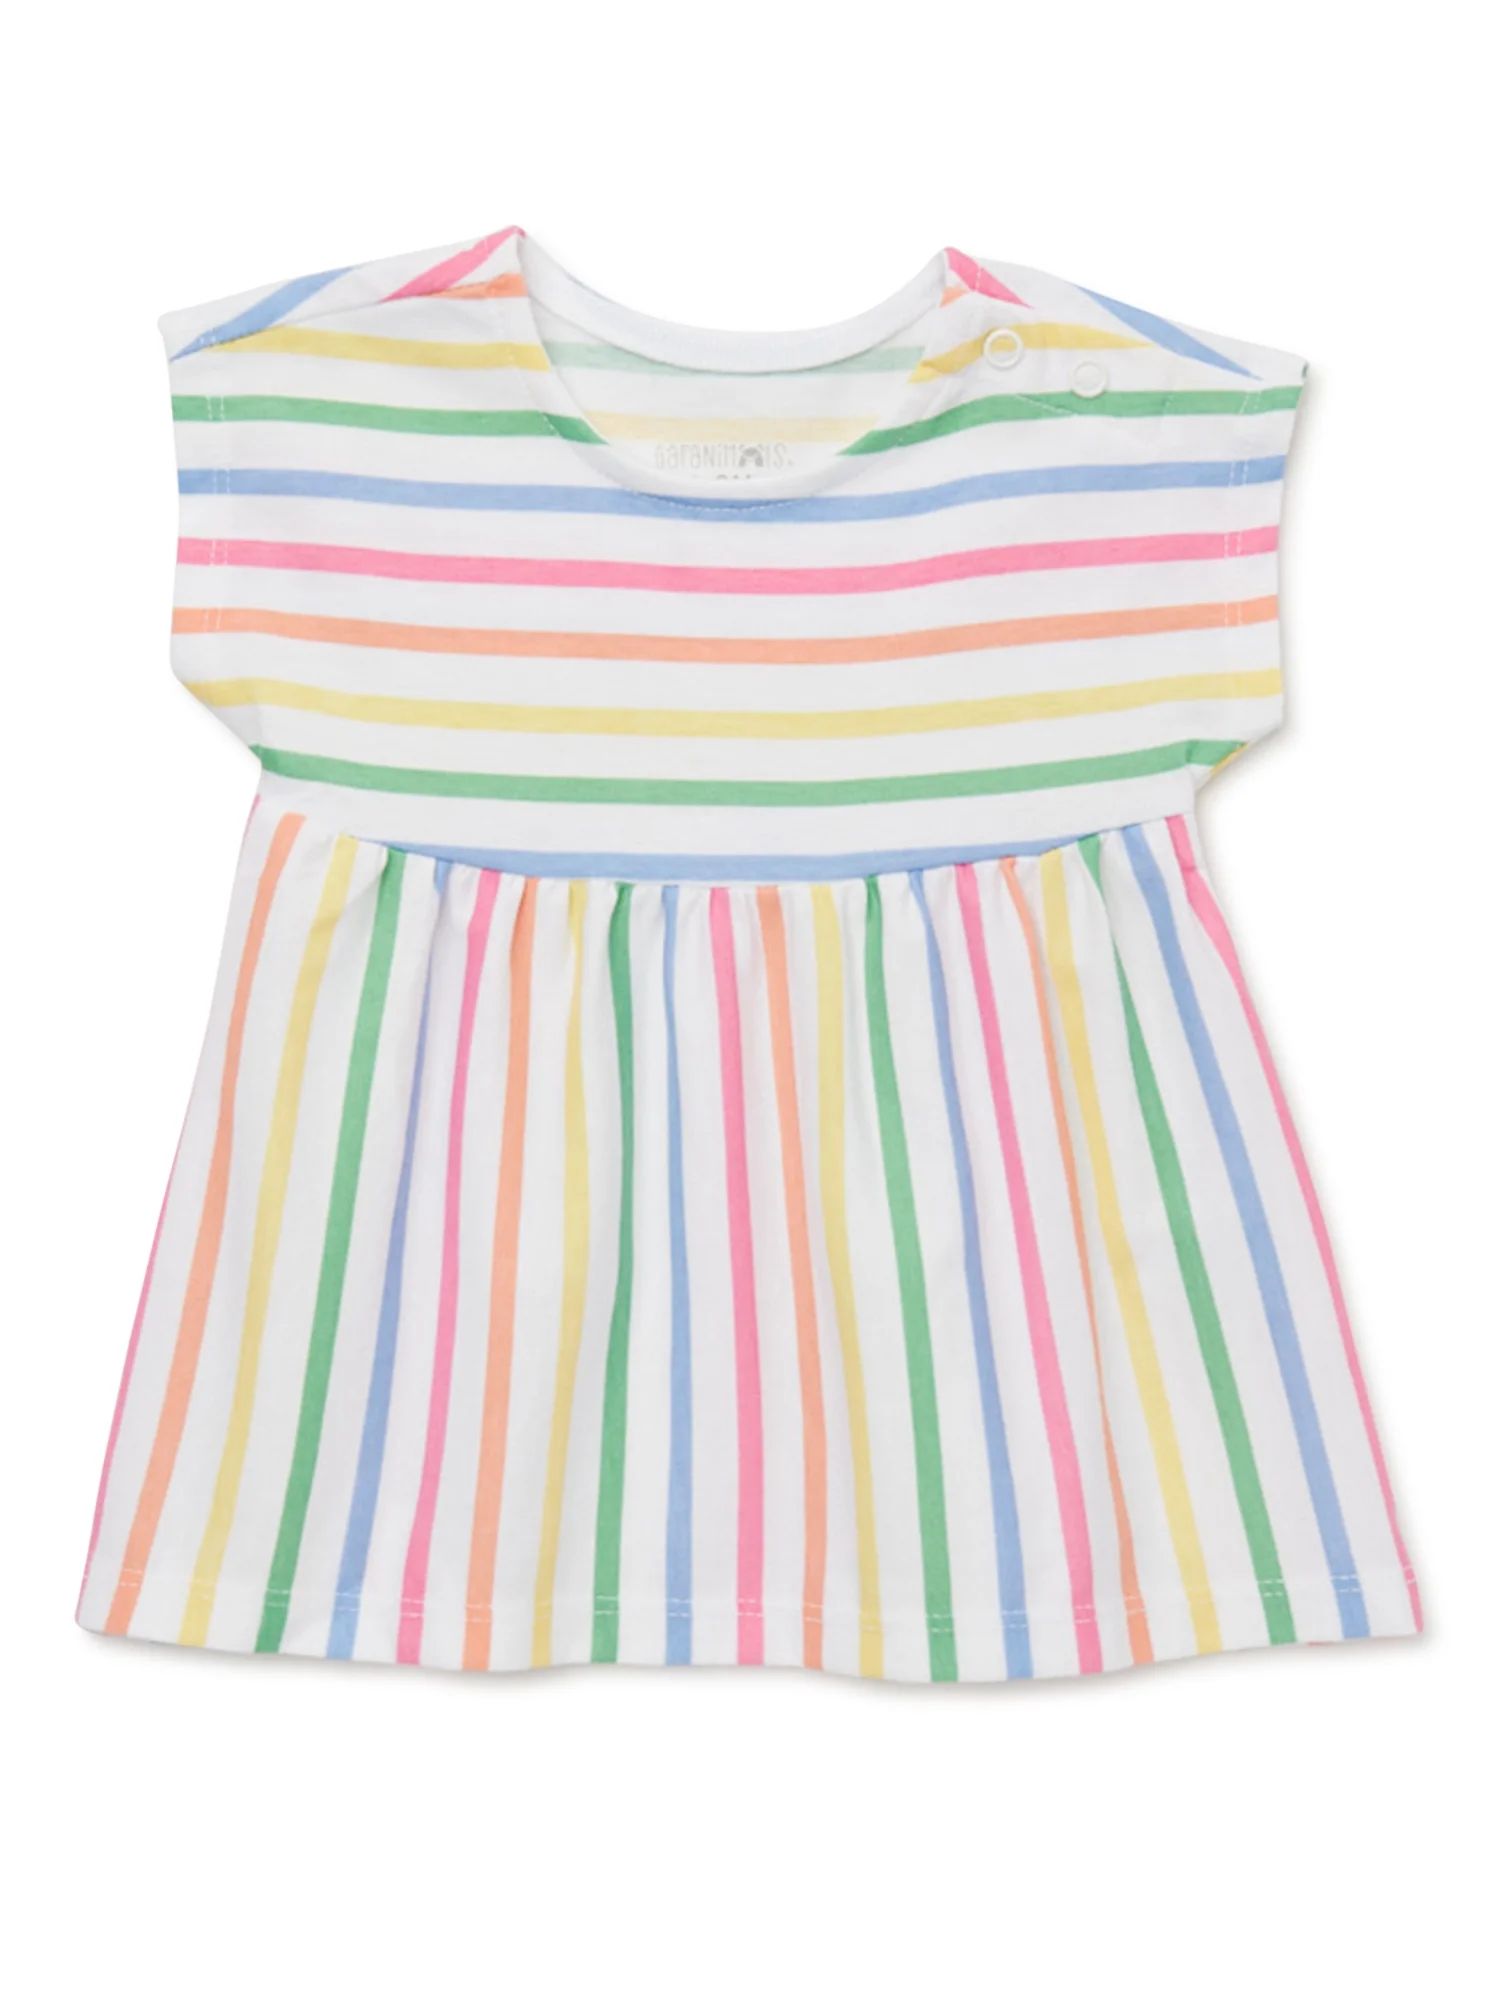 Garanimals Baby Girl Stripe Dolman Tunic Top, Sizes 0-24 Months | Walmart (US)